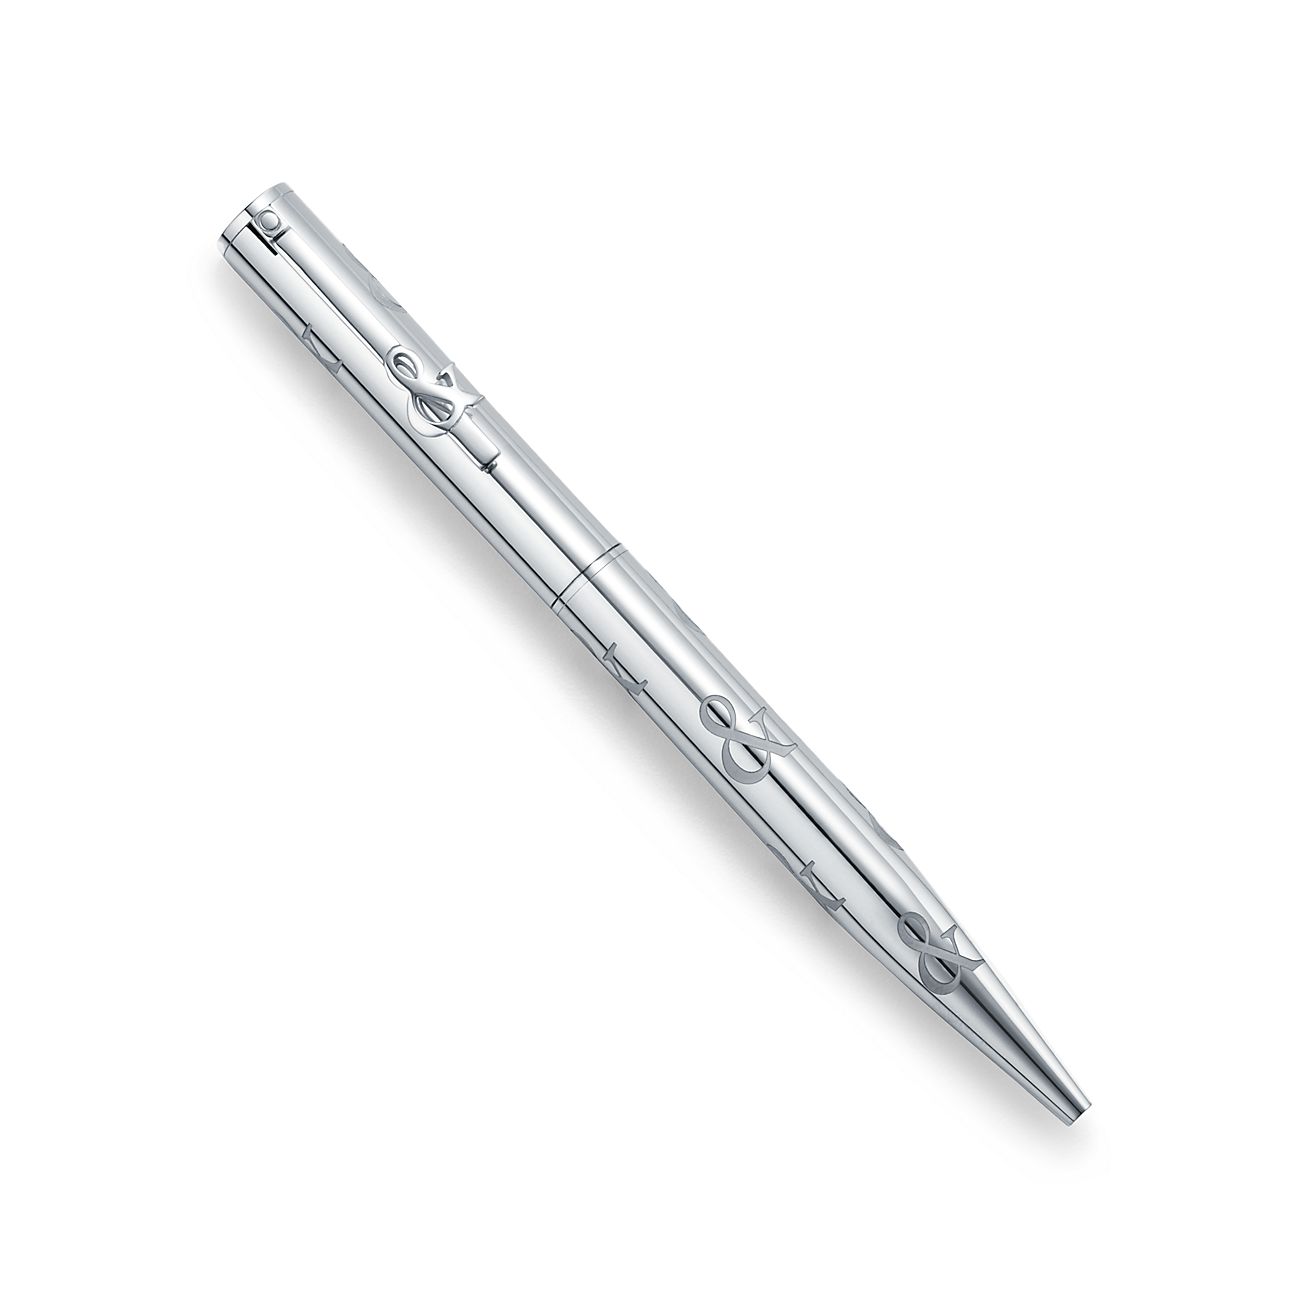 Tiffany Ampersand ballpoint pen in 